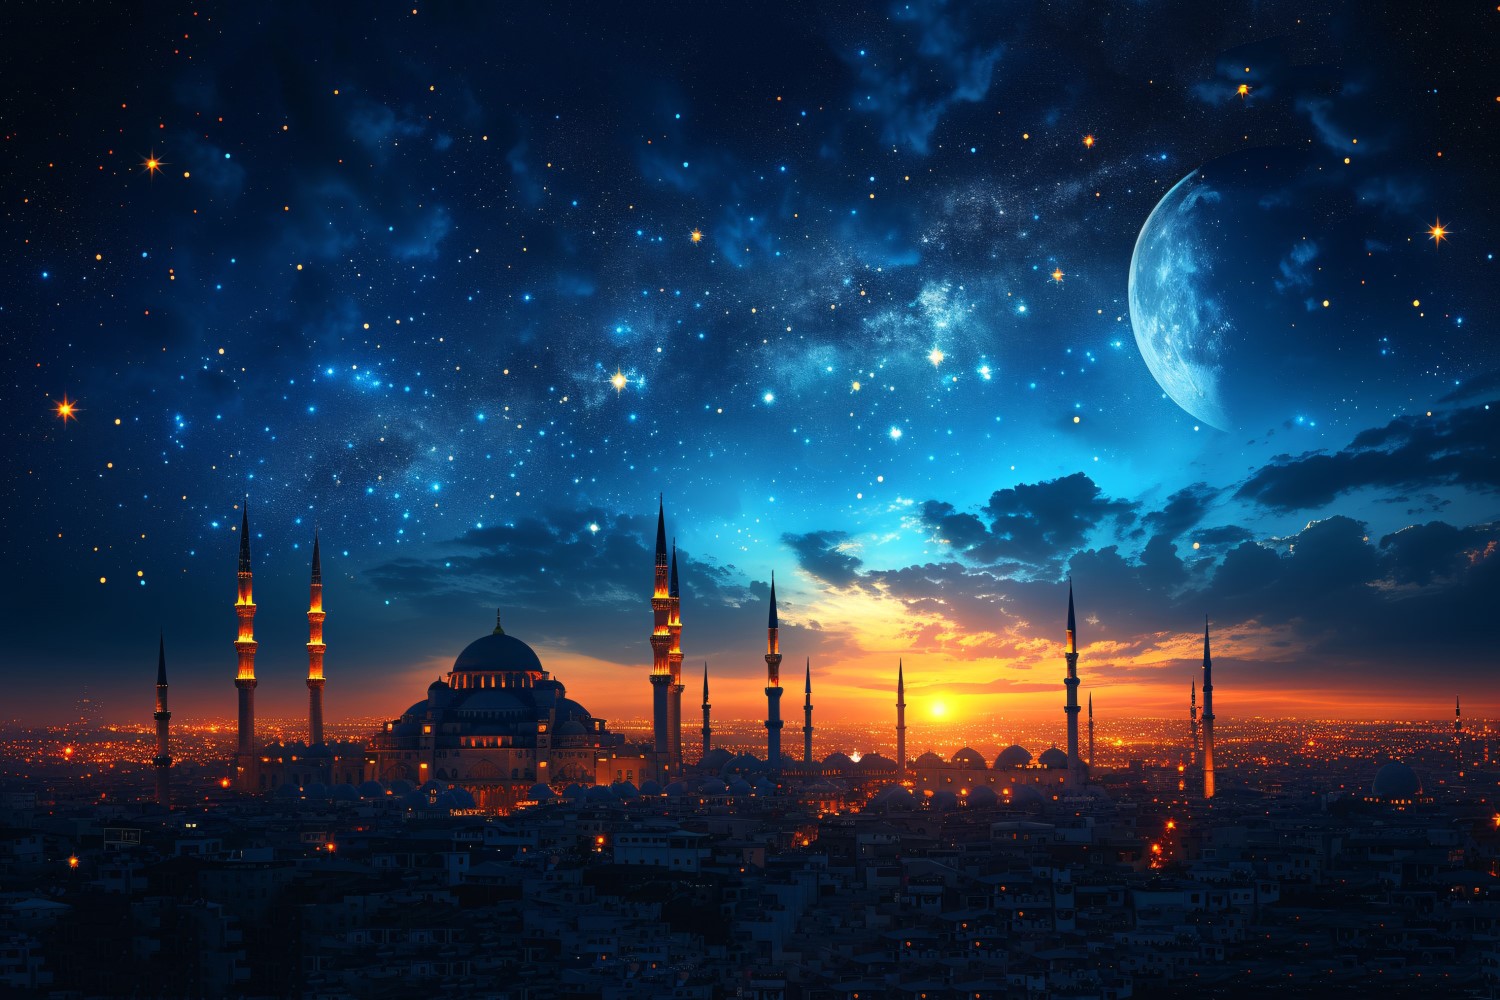 Ramadan Kareem greeting card banner poster design with mosque & moon 01